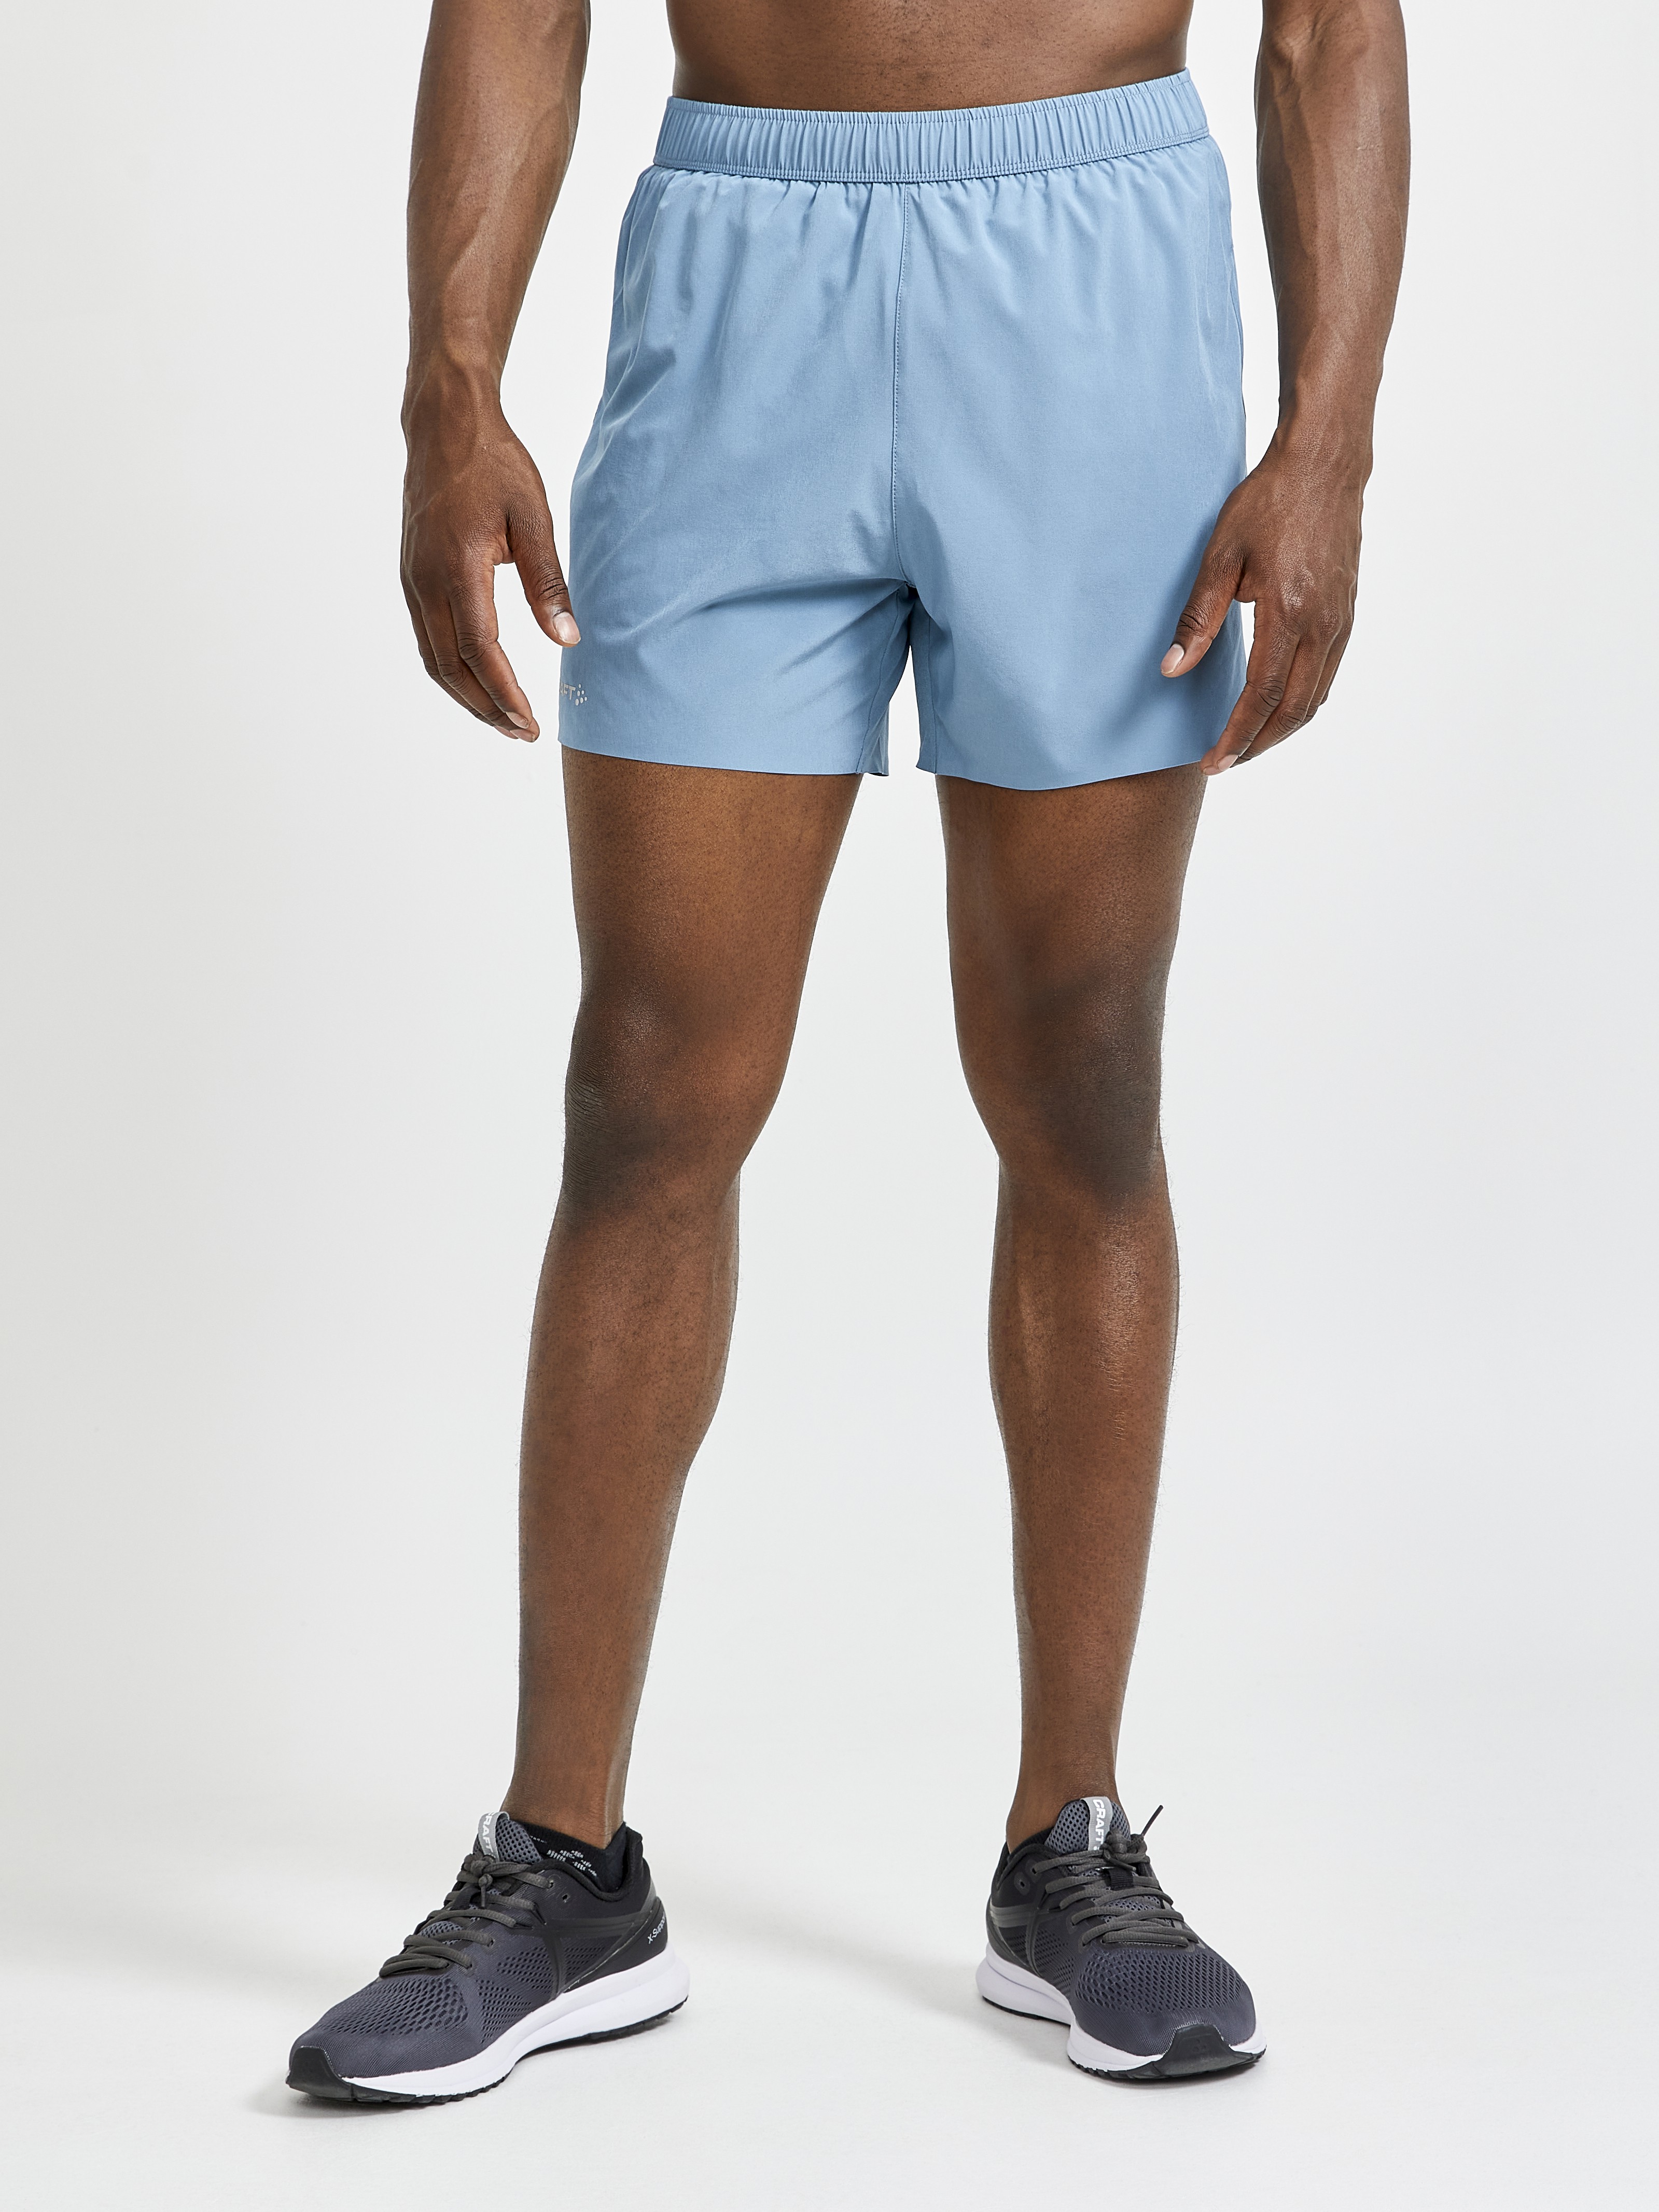 Athletic Shorts for Men | Craft Sportswear